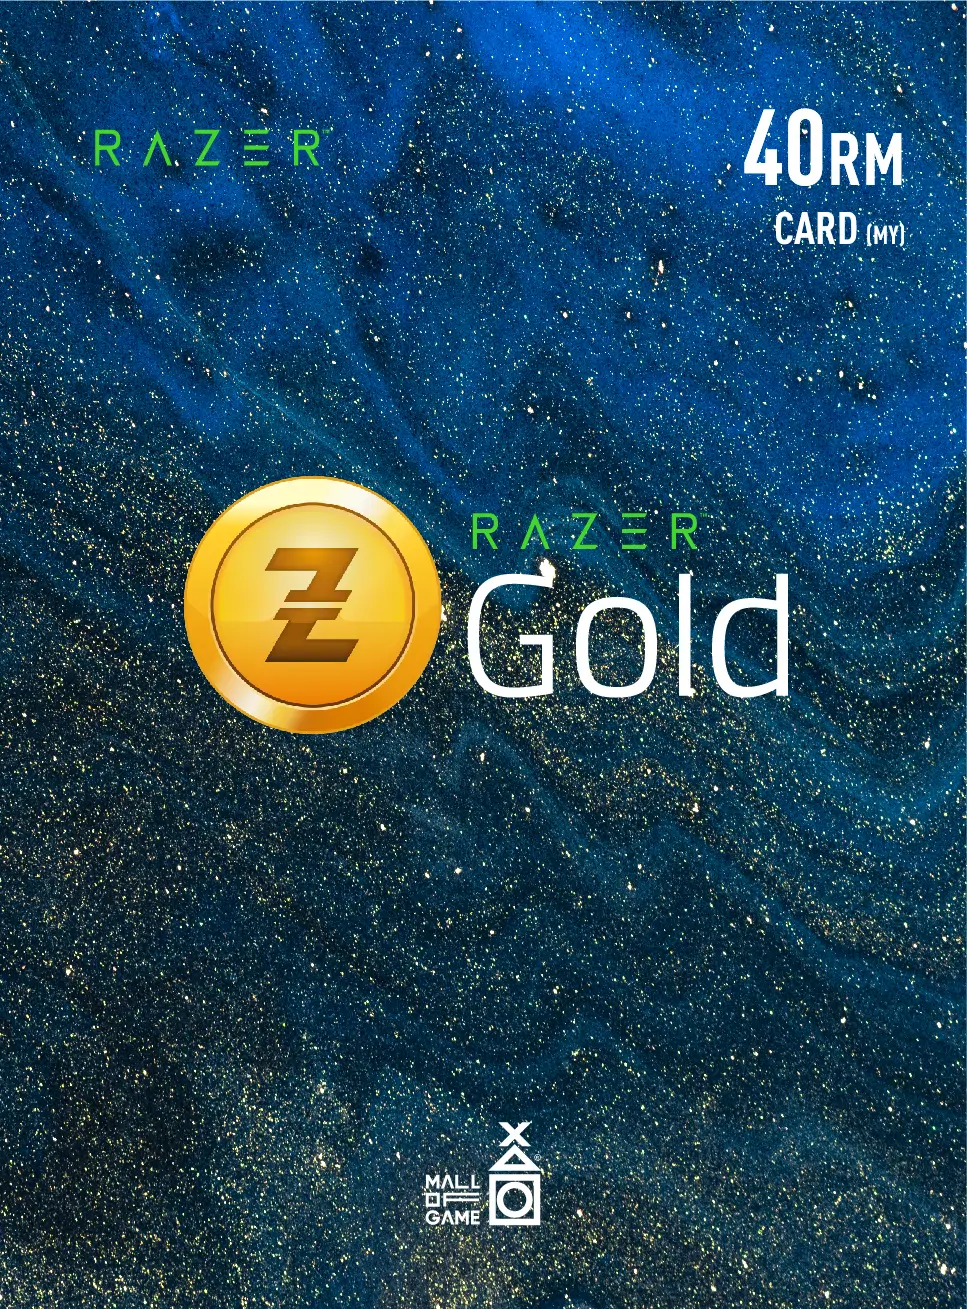 Razer Gold RM40 (MY)